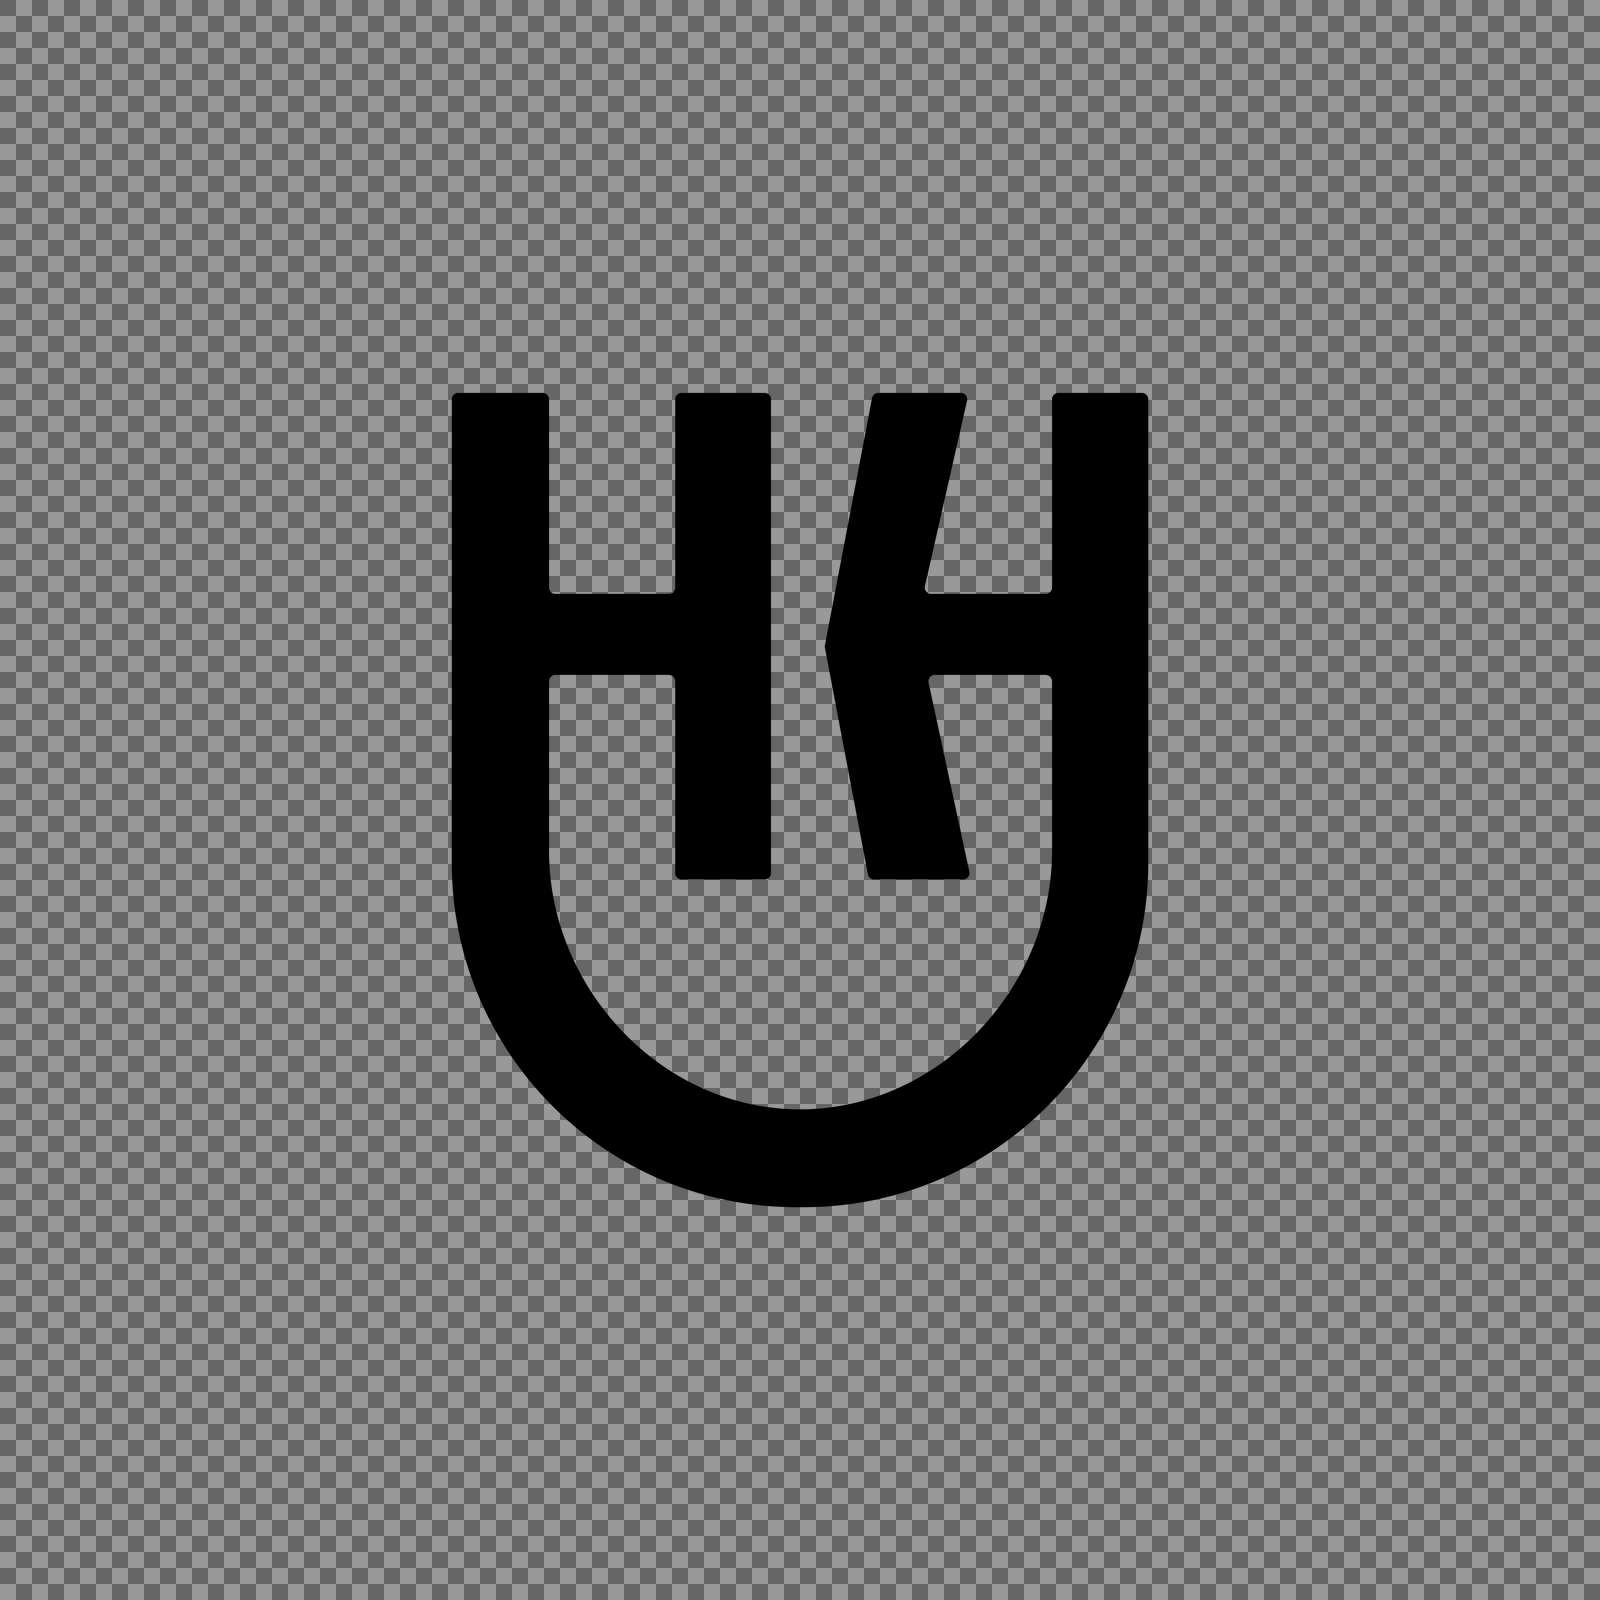 horsens logo symbol black transparent